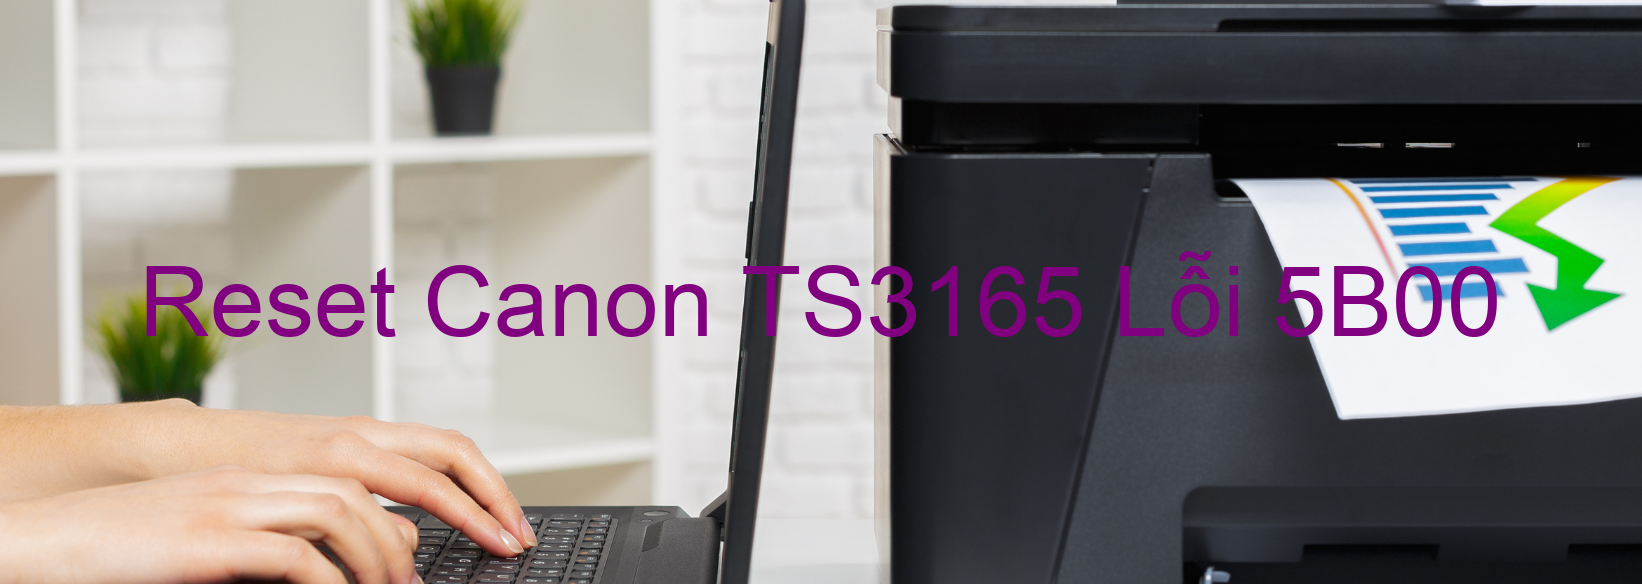 Reset Canon TS3165 Lỗi 5B00